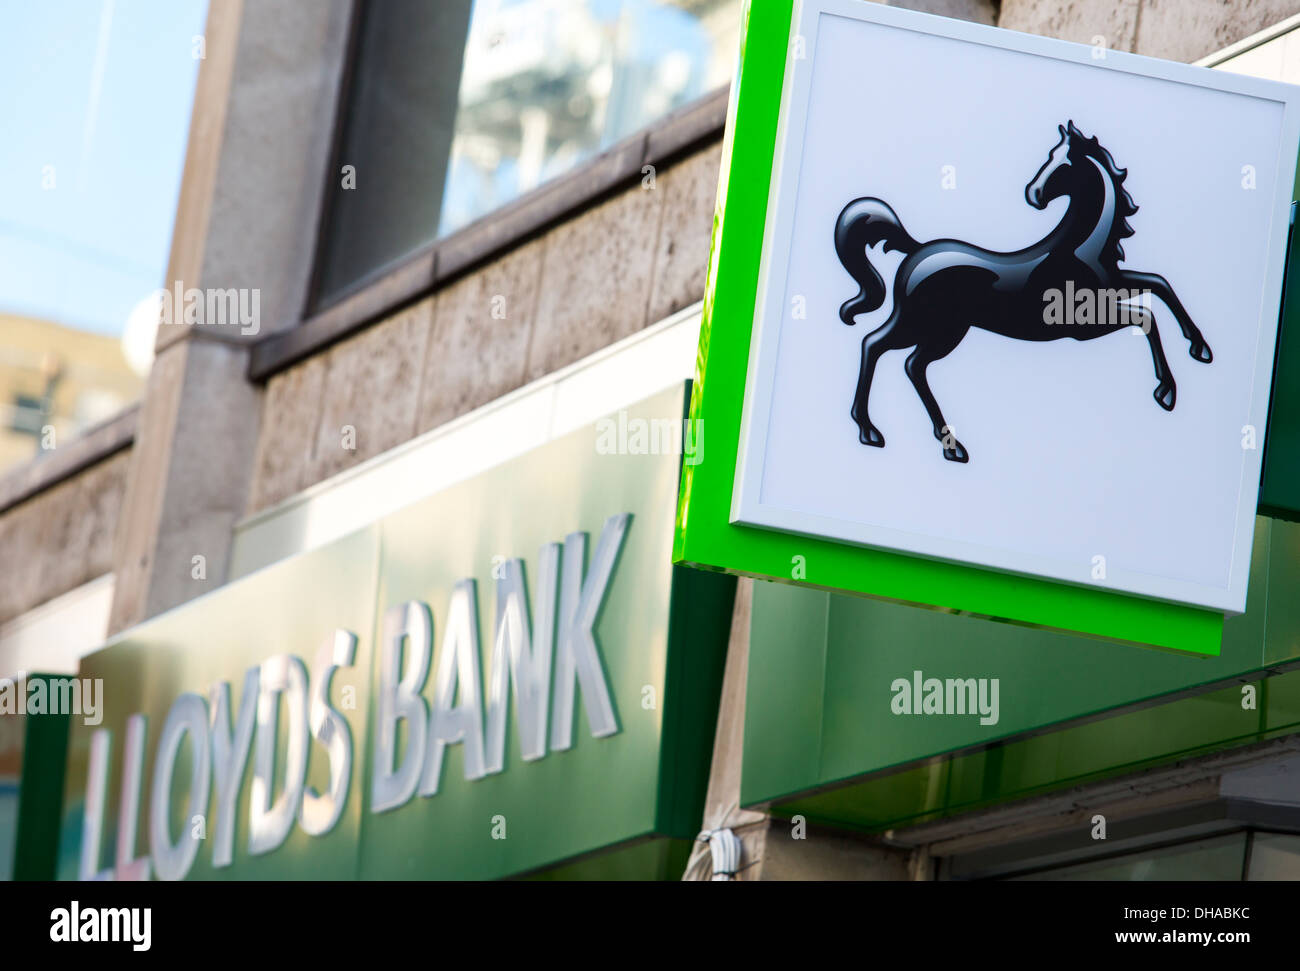 11.04.2013 Lloyds. Bank-Zeichen. London, UK Stockfoto